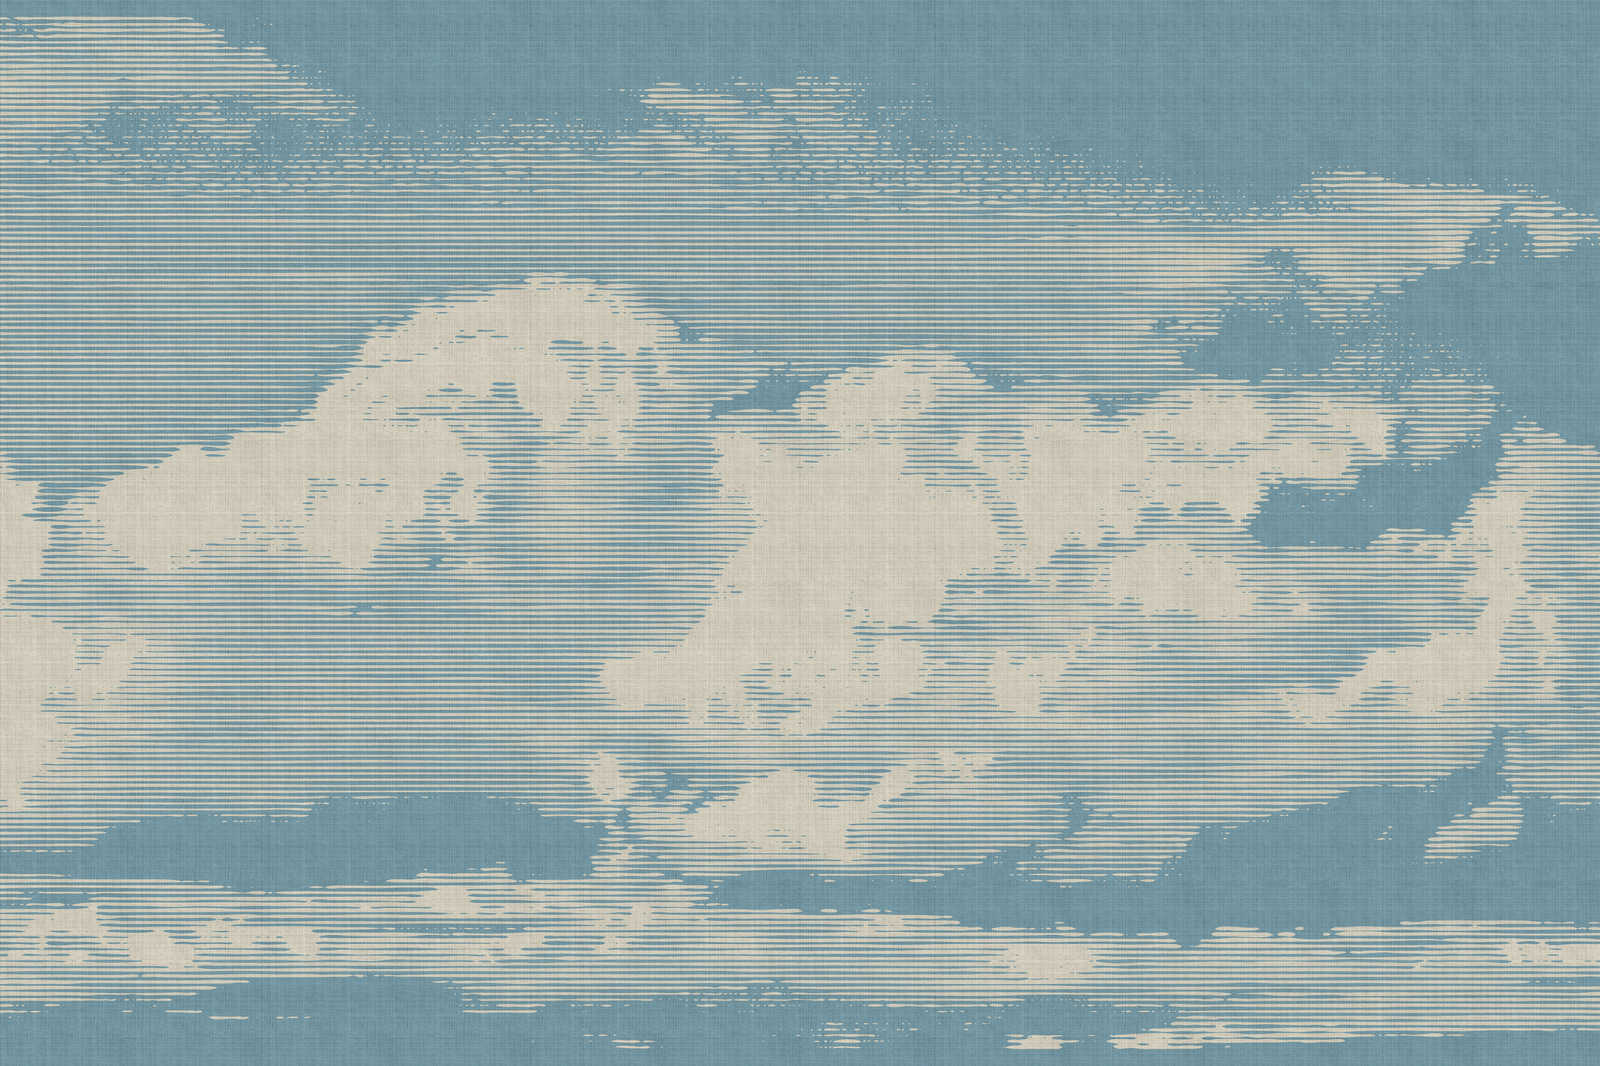             Nubes 1 - Lienzo celestial con motivo de nubes en aspecto de lino natural - 0,90 m x 0,60 m
        